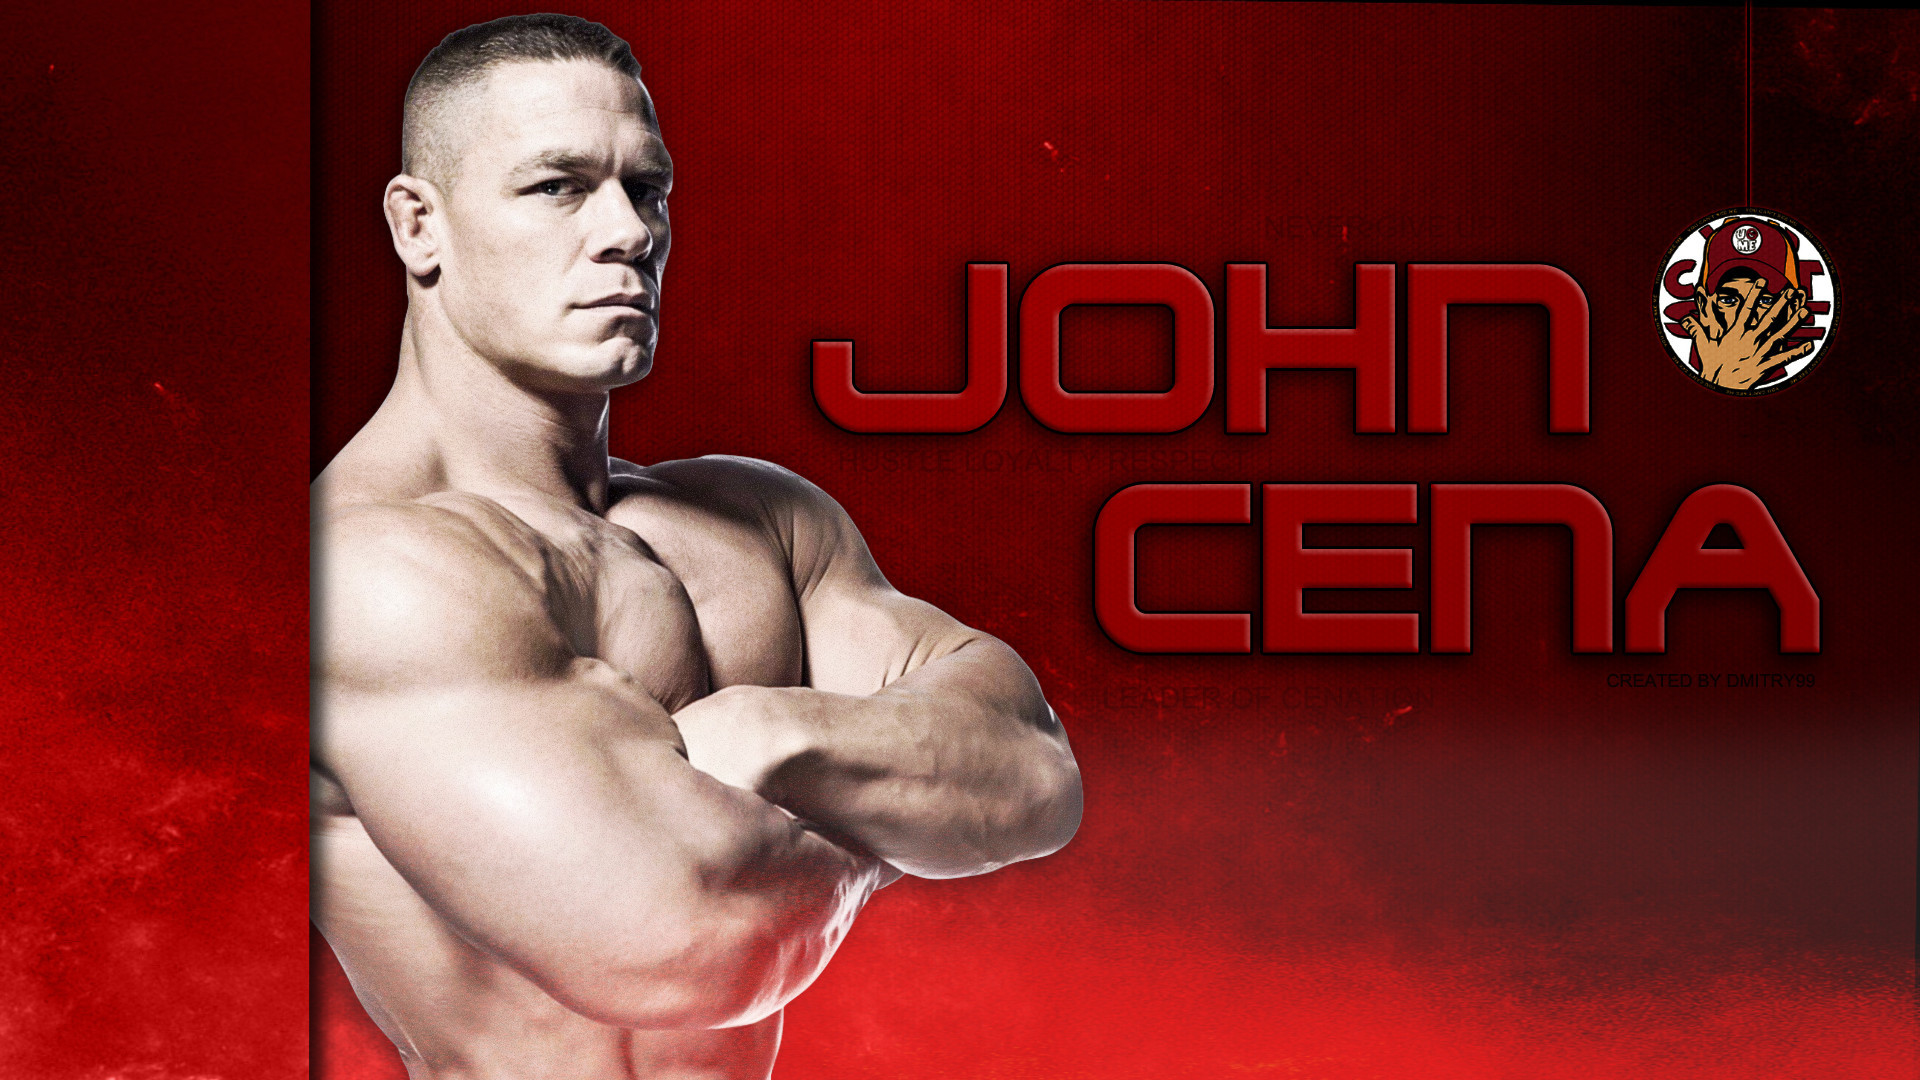 1920x1080 John Cena In The Ring Wallpaper John Cena Images Wwe